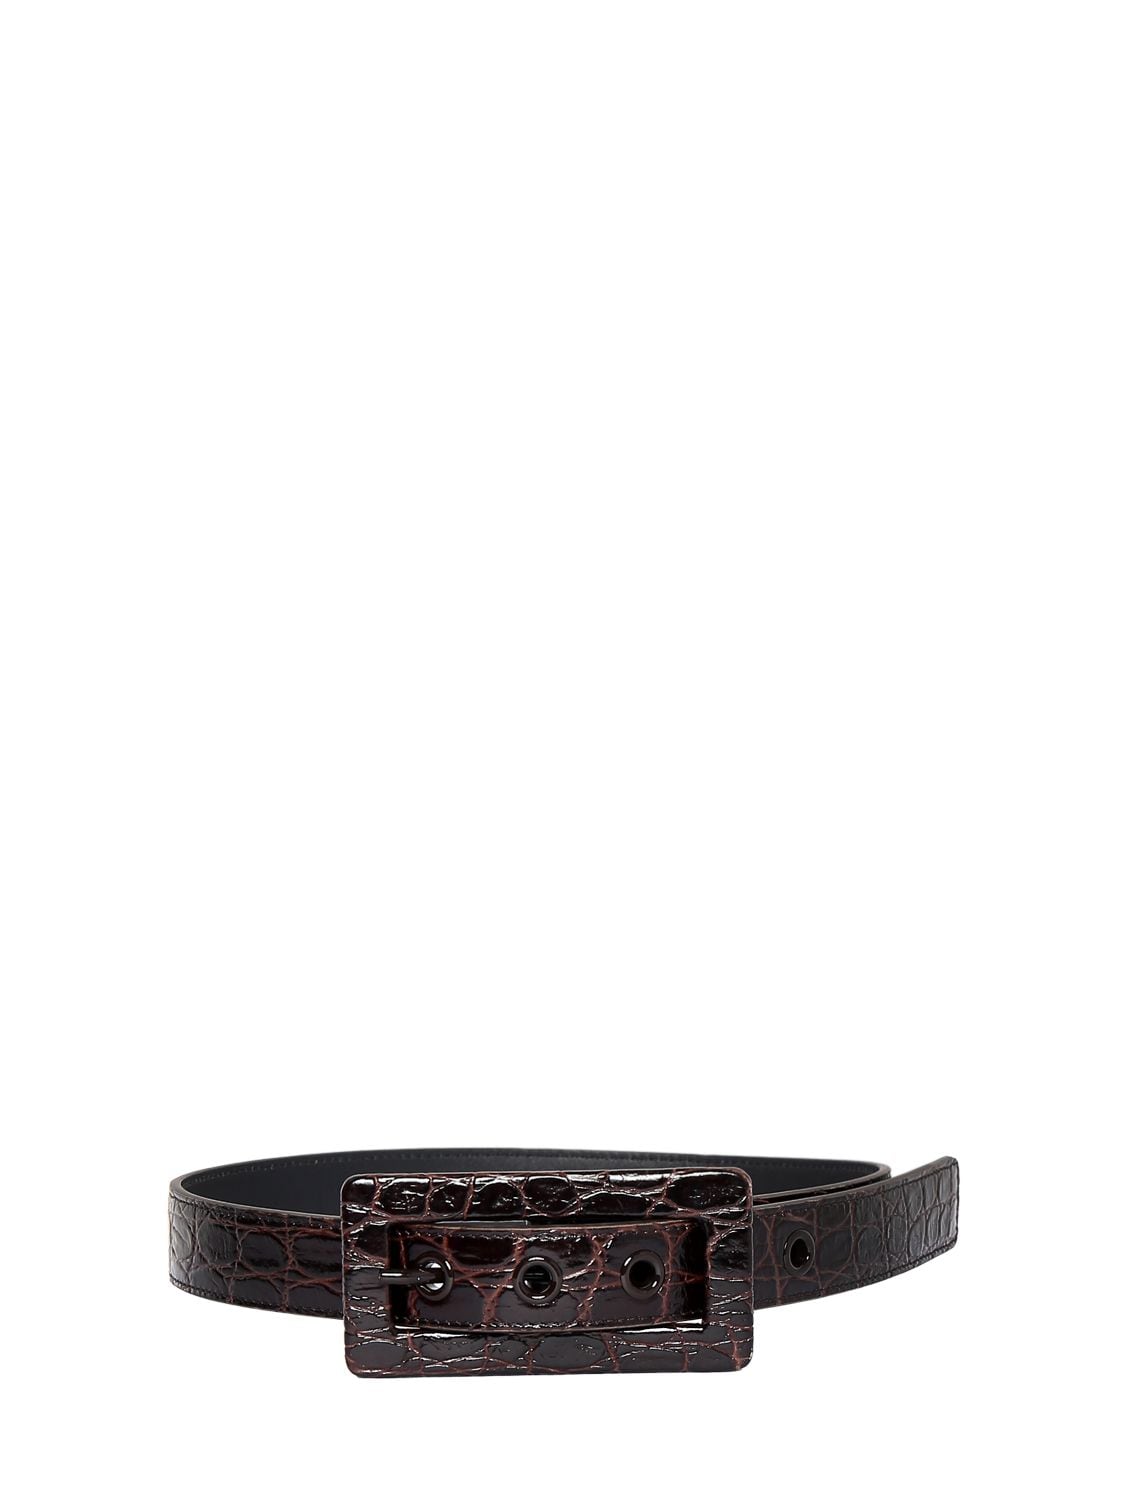 Saint Laurent 25mm Croc Embossed Leather Belt In Brown